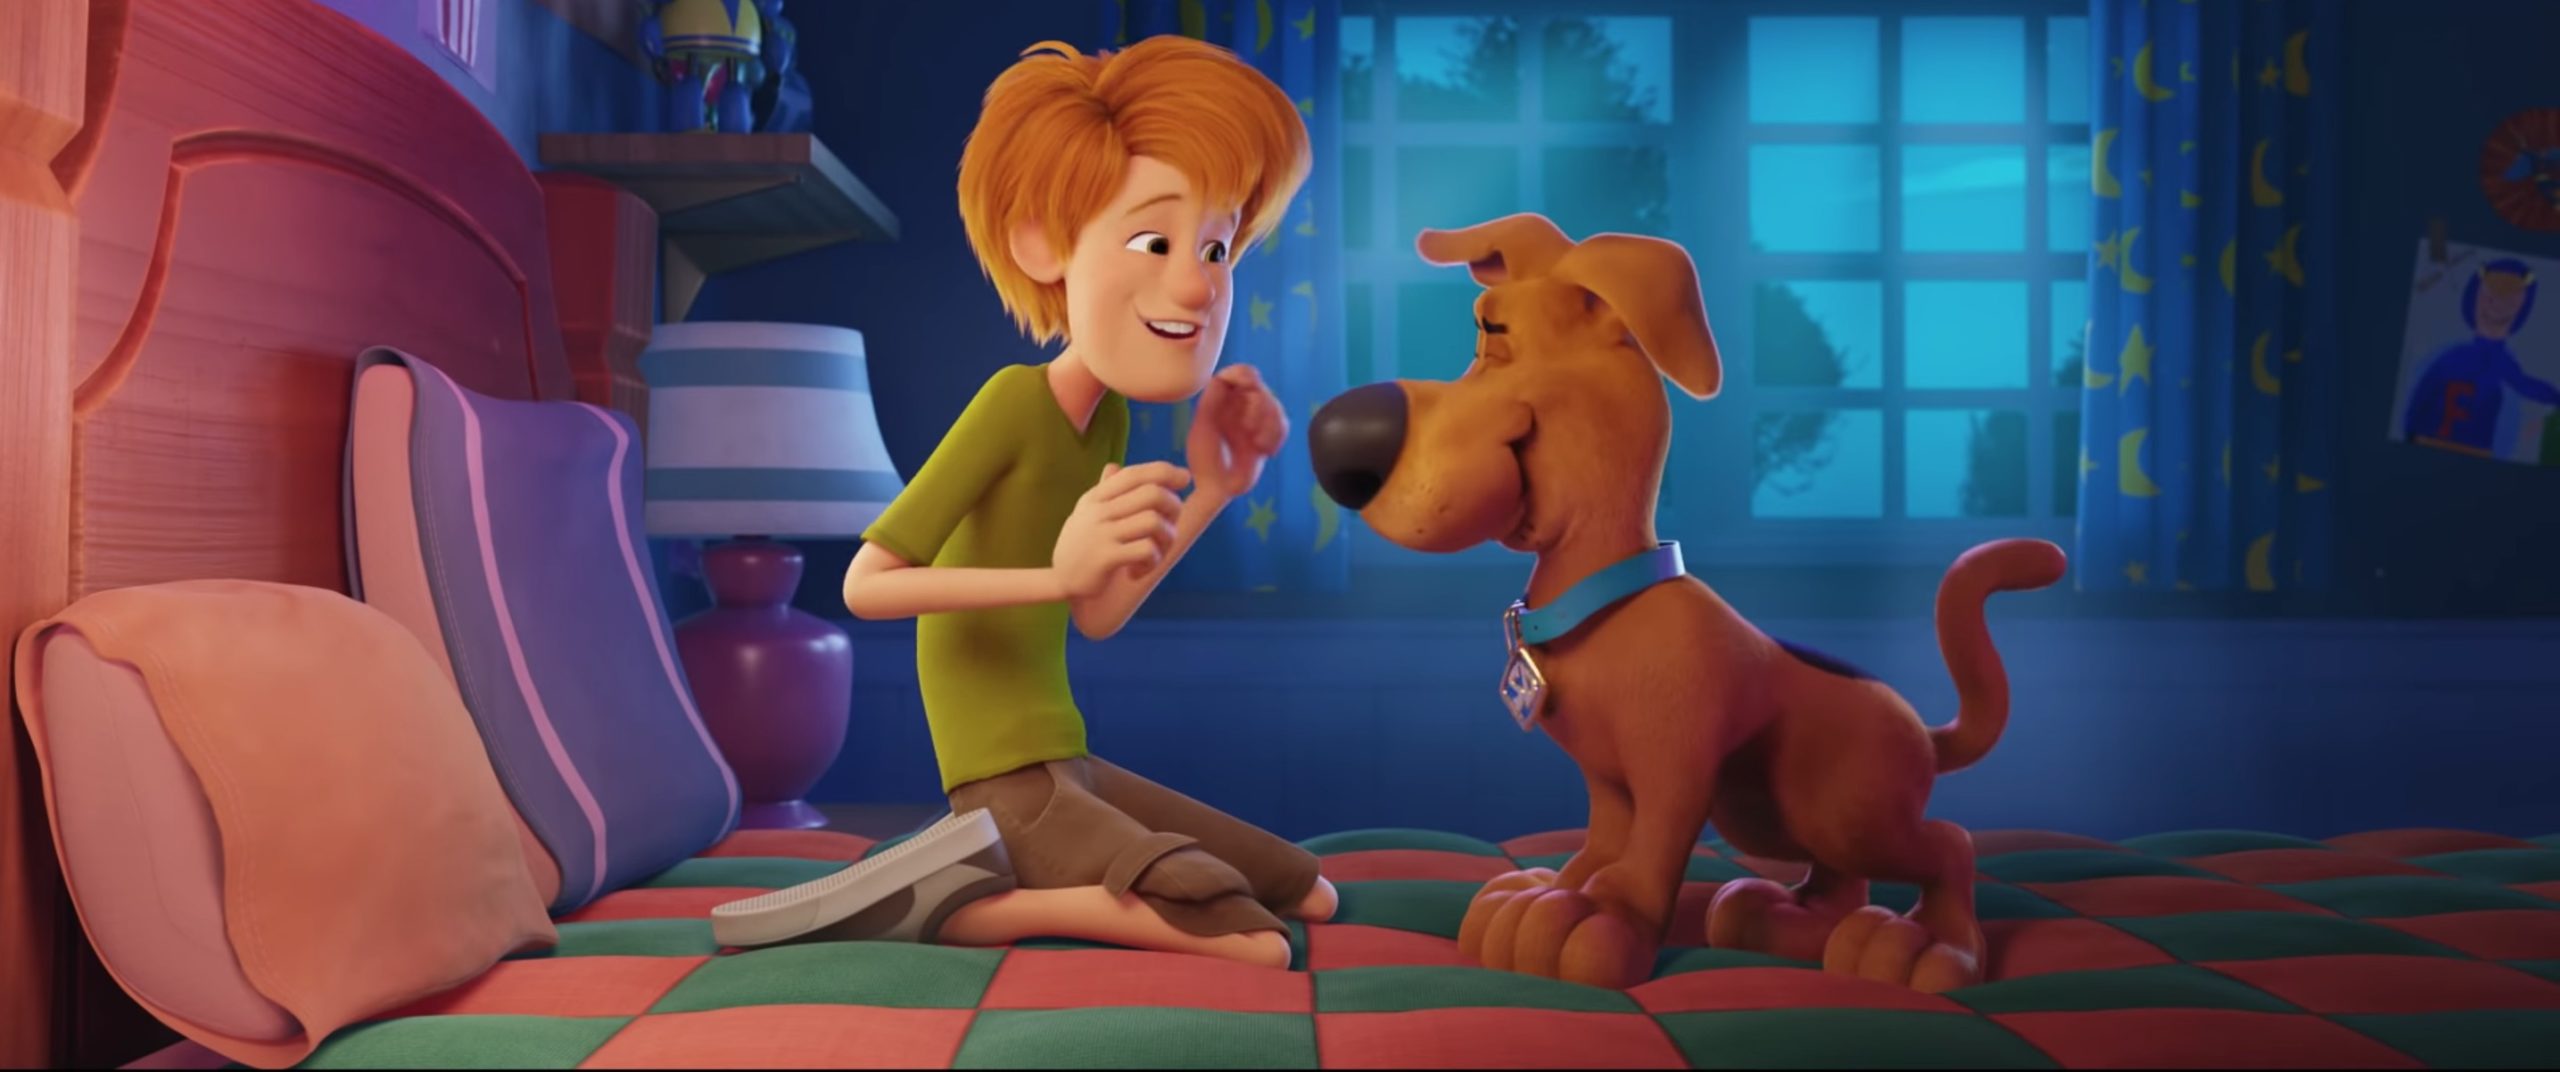 Scoob Trailer Arrives For New ScoobyDoo Movie Den of Geek